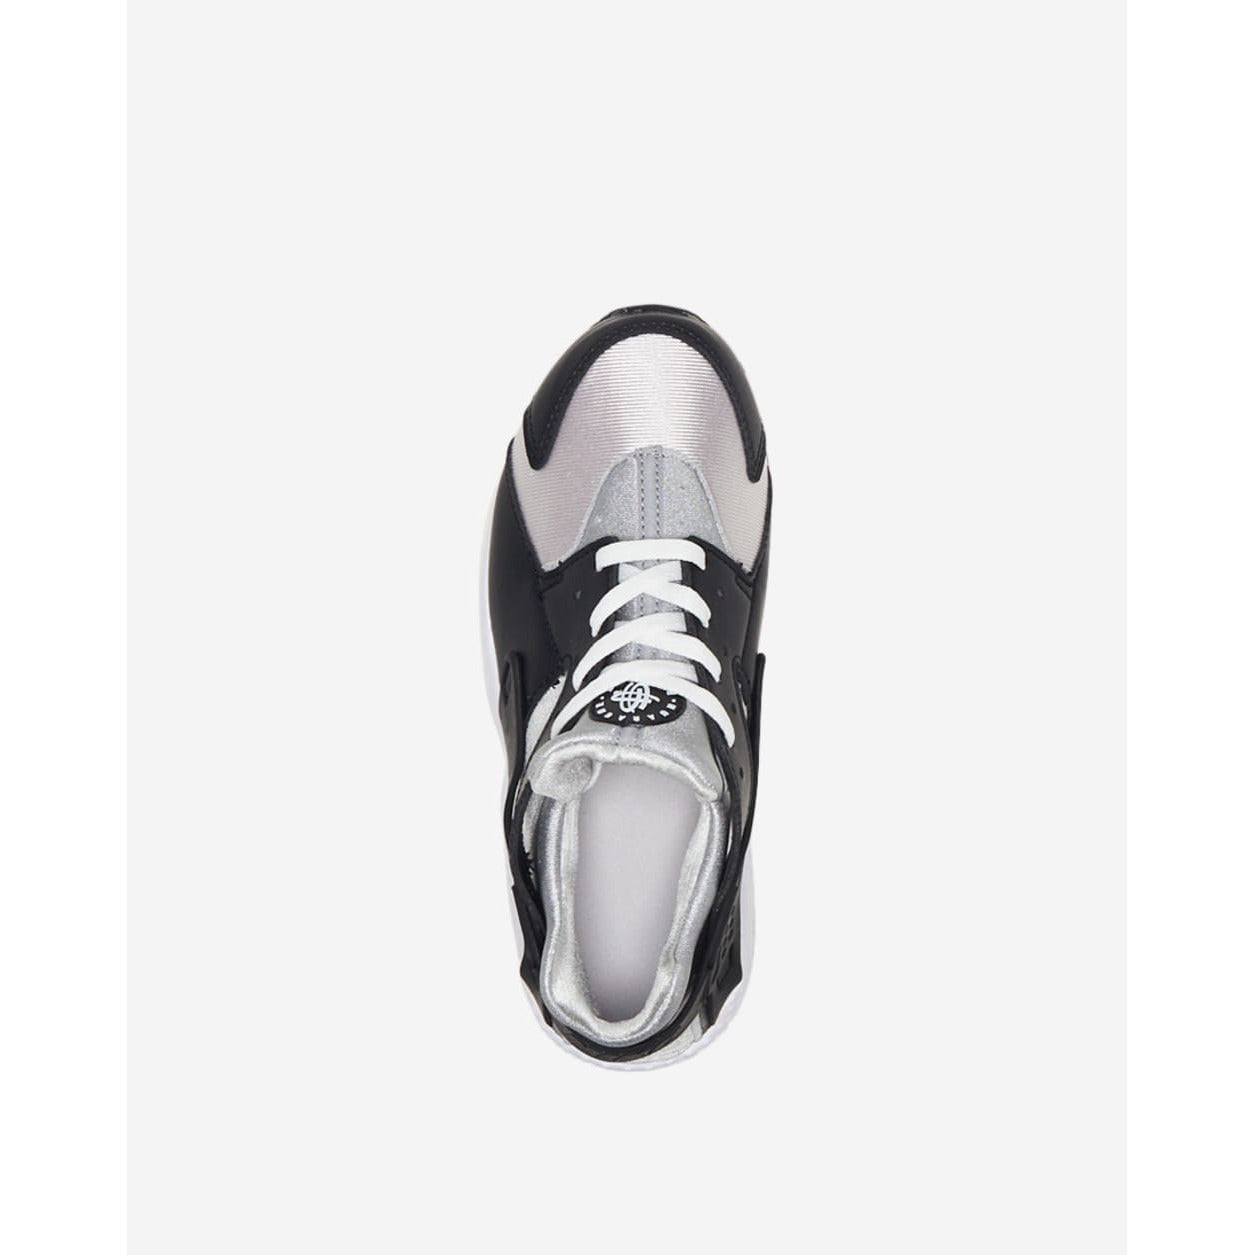 Nike Kids Huarache Run 'Black Neutral Grey' (PS) 704949-044